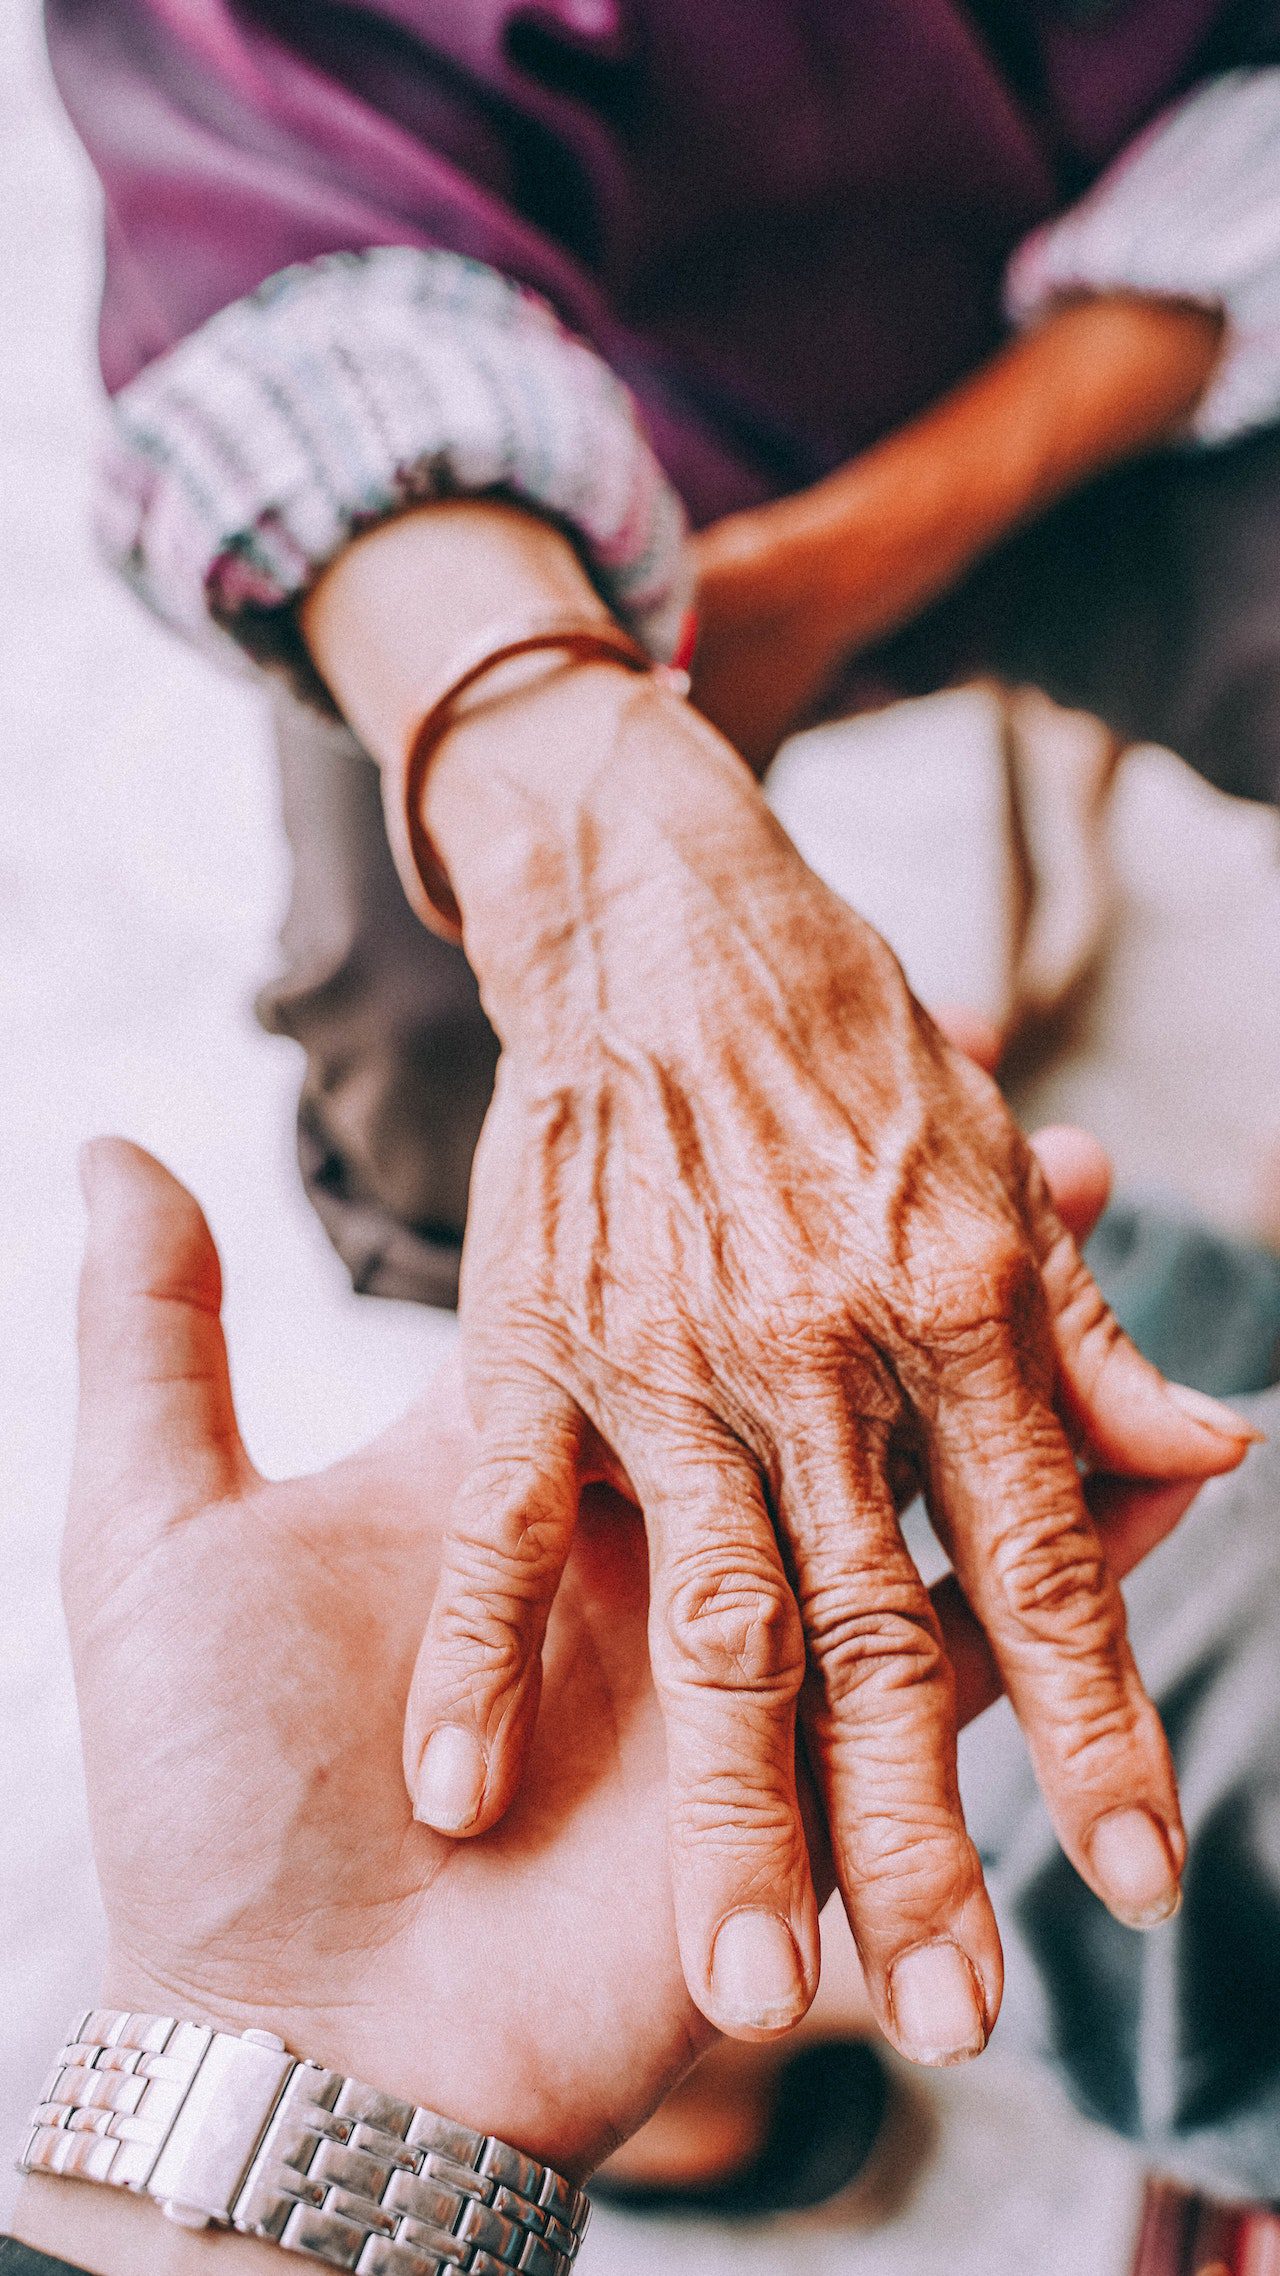 Photos of arthritis in an elderly woman’s hand.